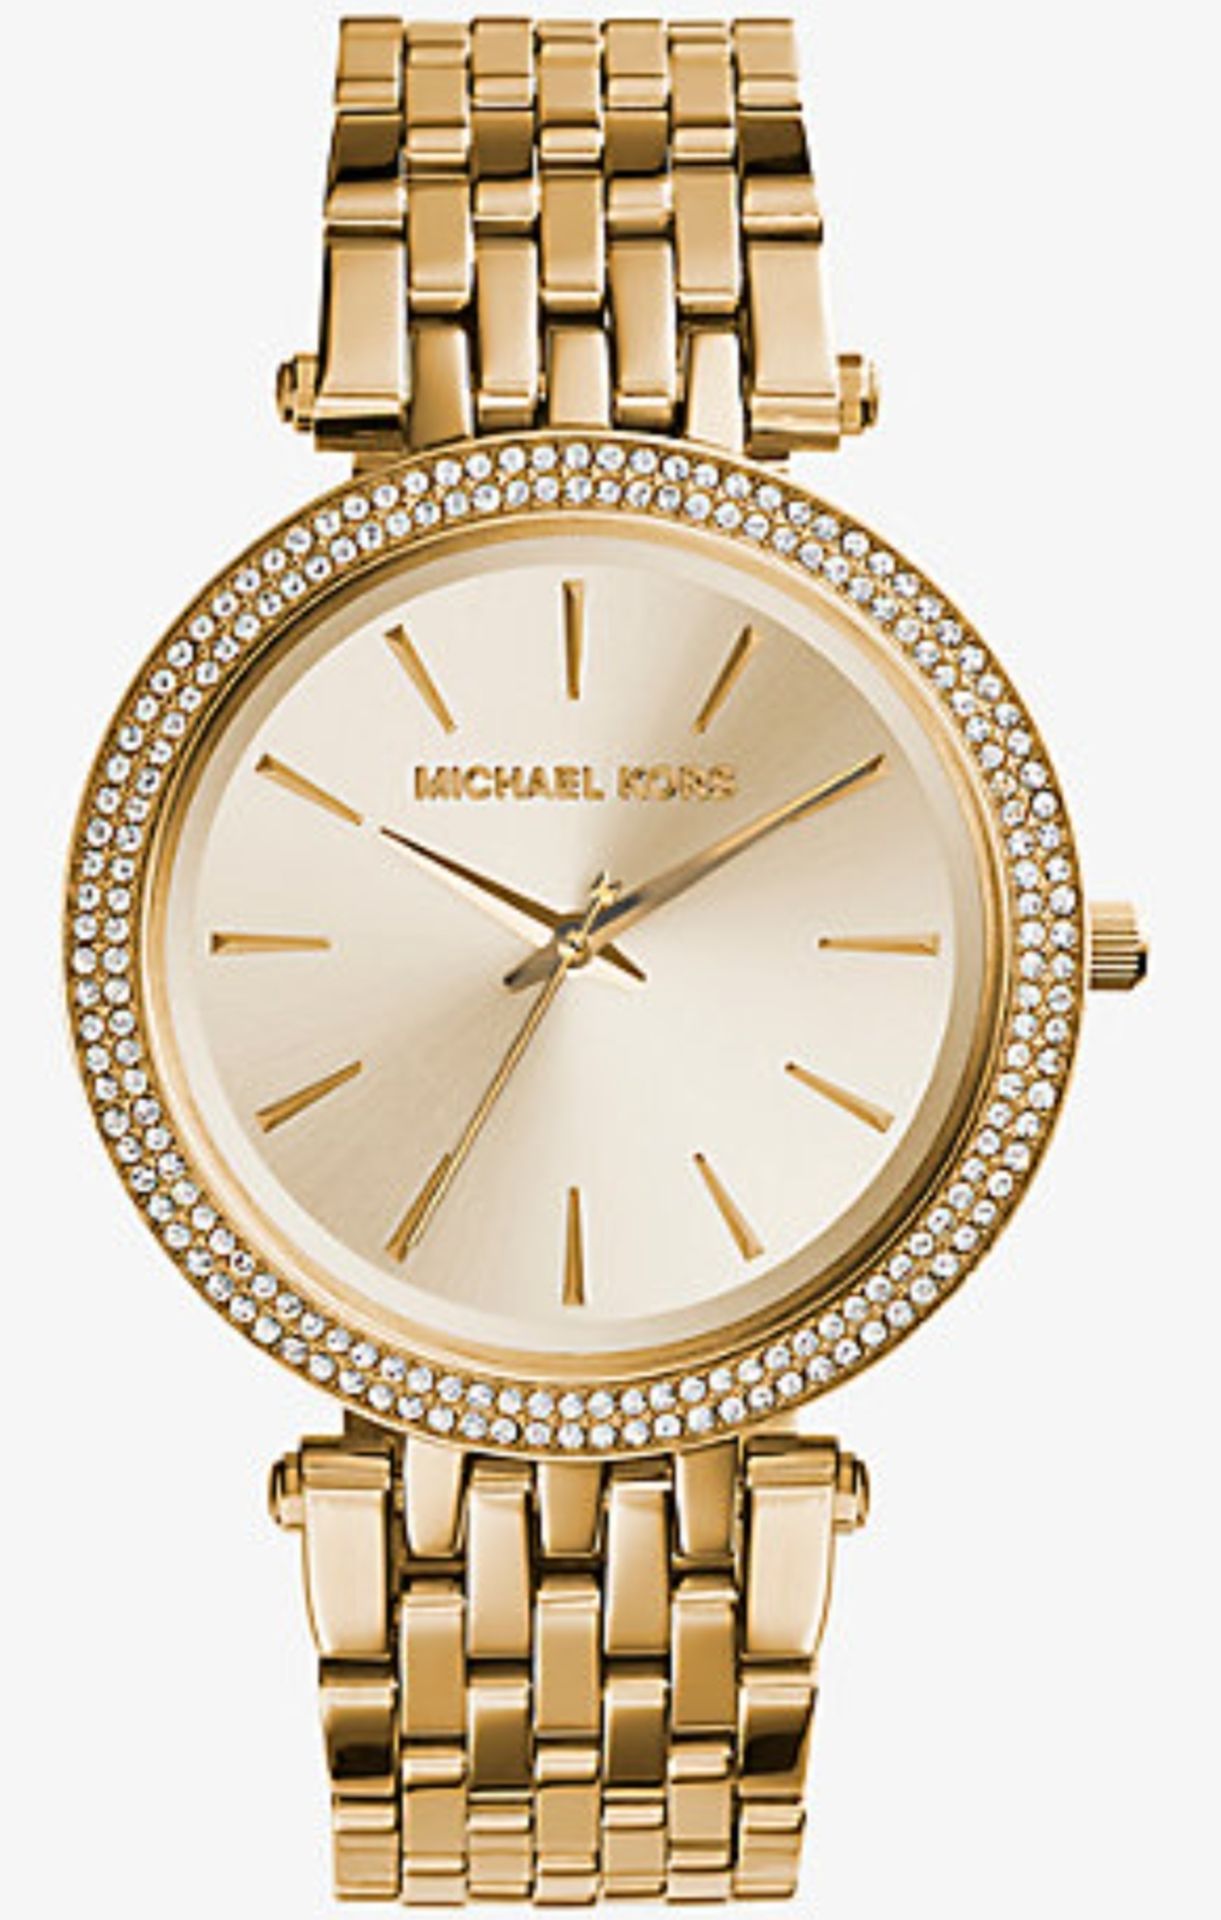 Michael Kors MK3191 Darci Gold Stainless Steel Ladies Watch - Image 3 of 6